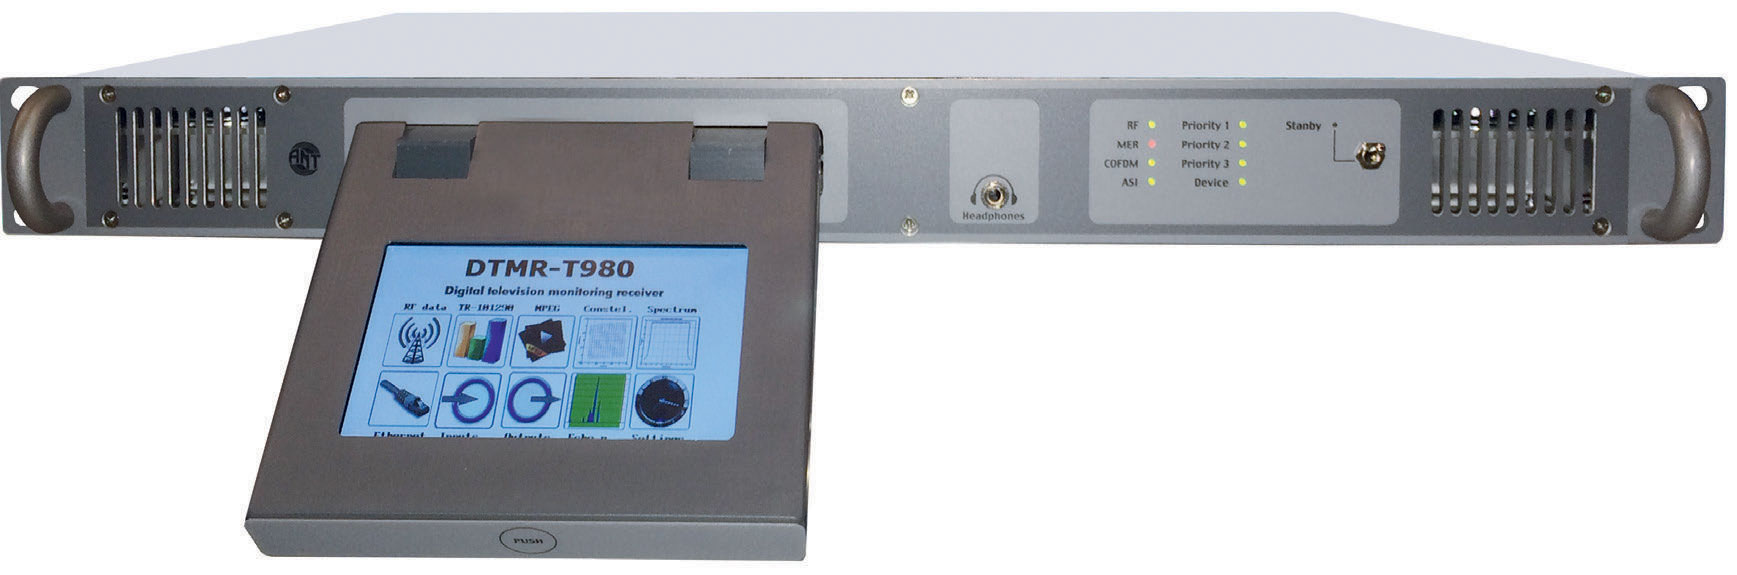 antgroup-receiver-dtmr-t900